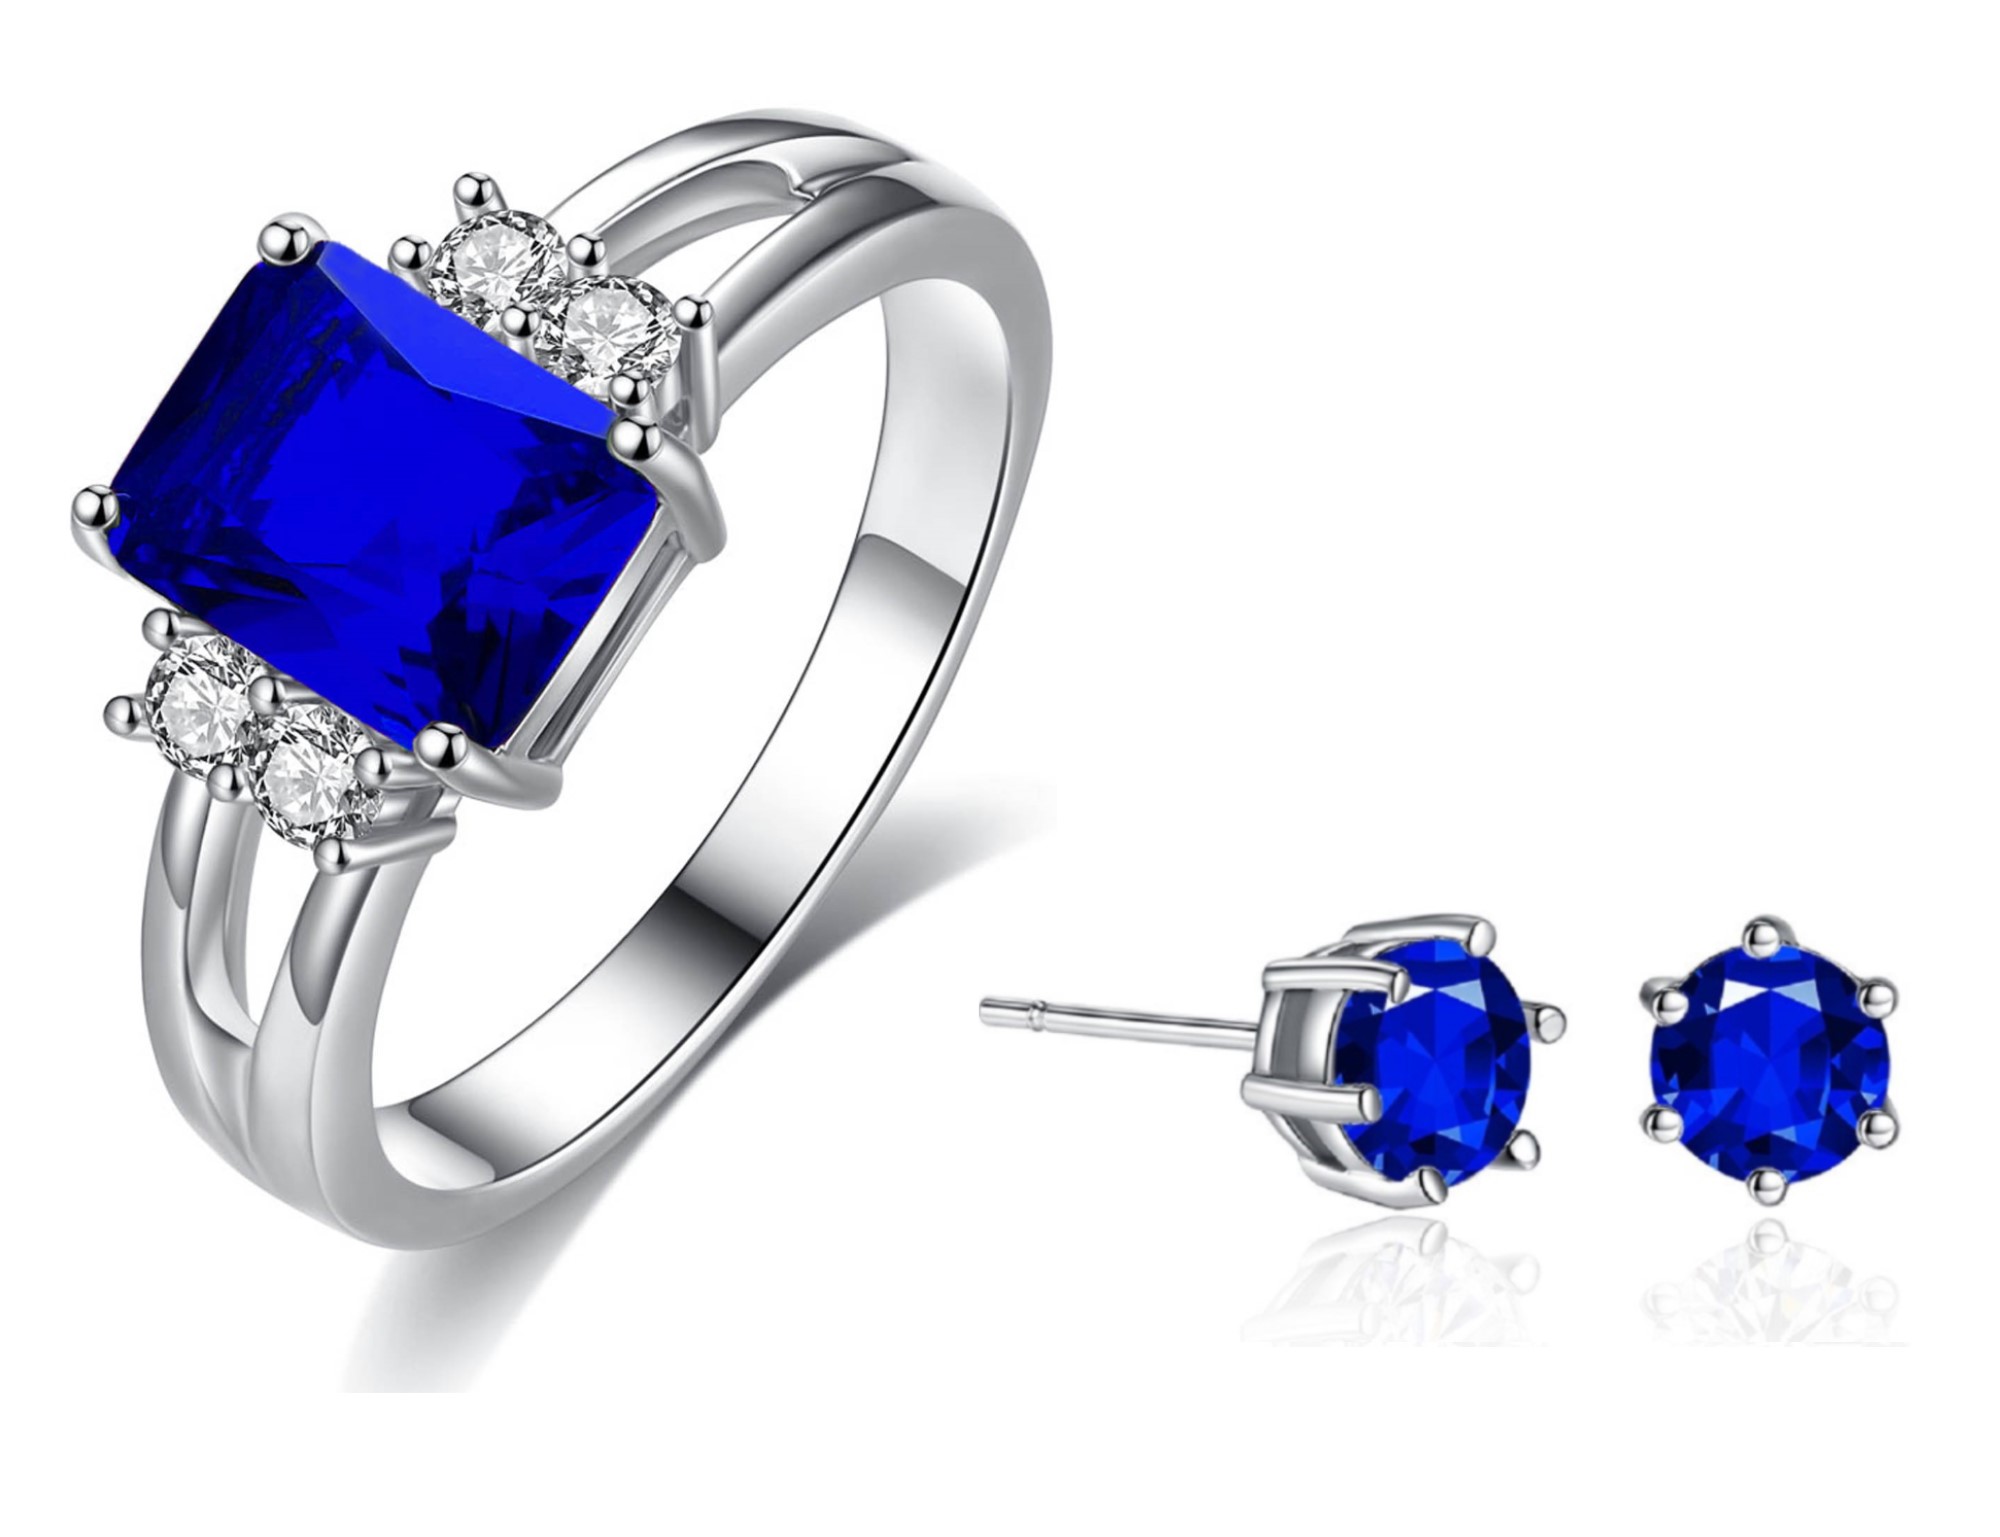 20 pcs - Trilogy Emerald Blue Crystal Ring and Earrings Set - 10 Sets - Random Size|GCJ032+GCJ019|UK SELLER